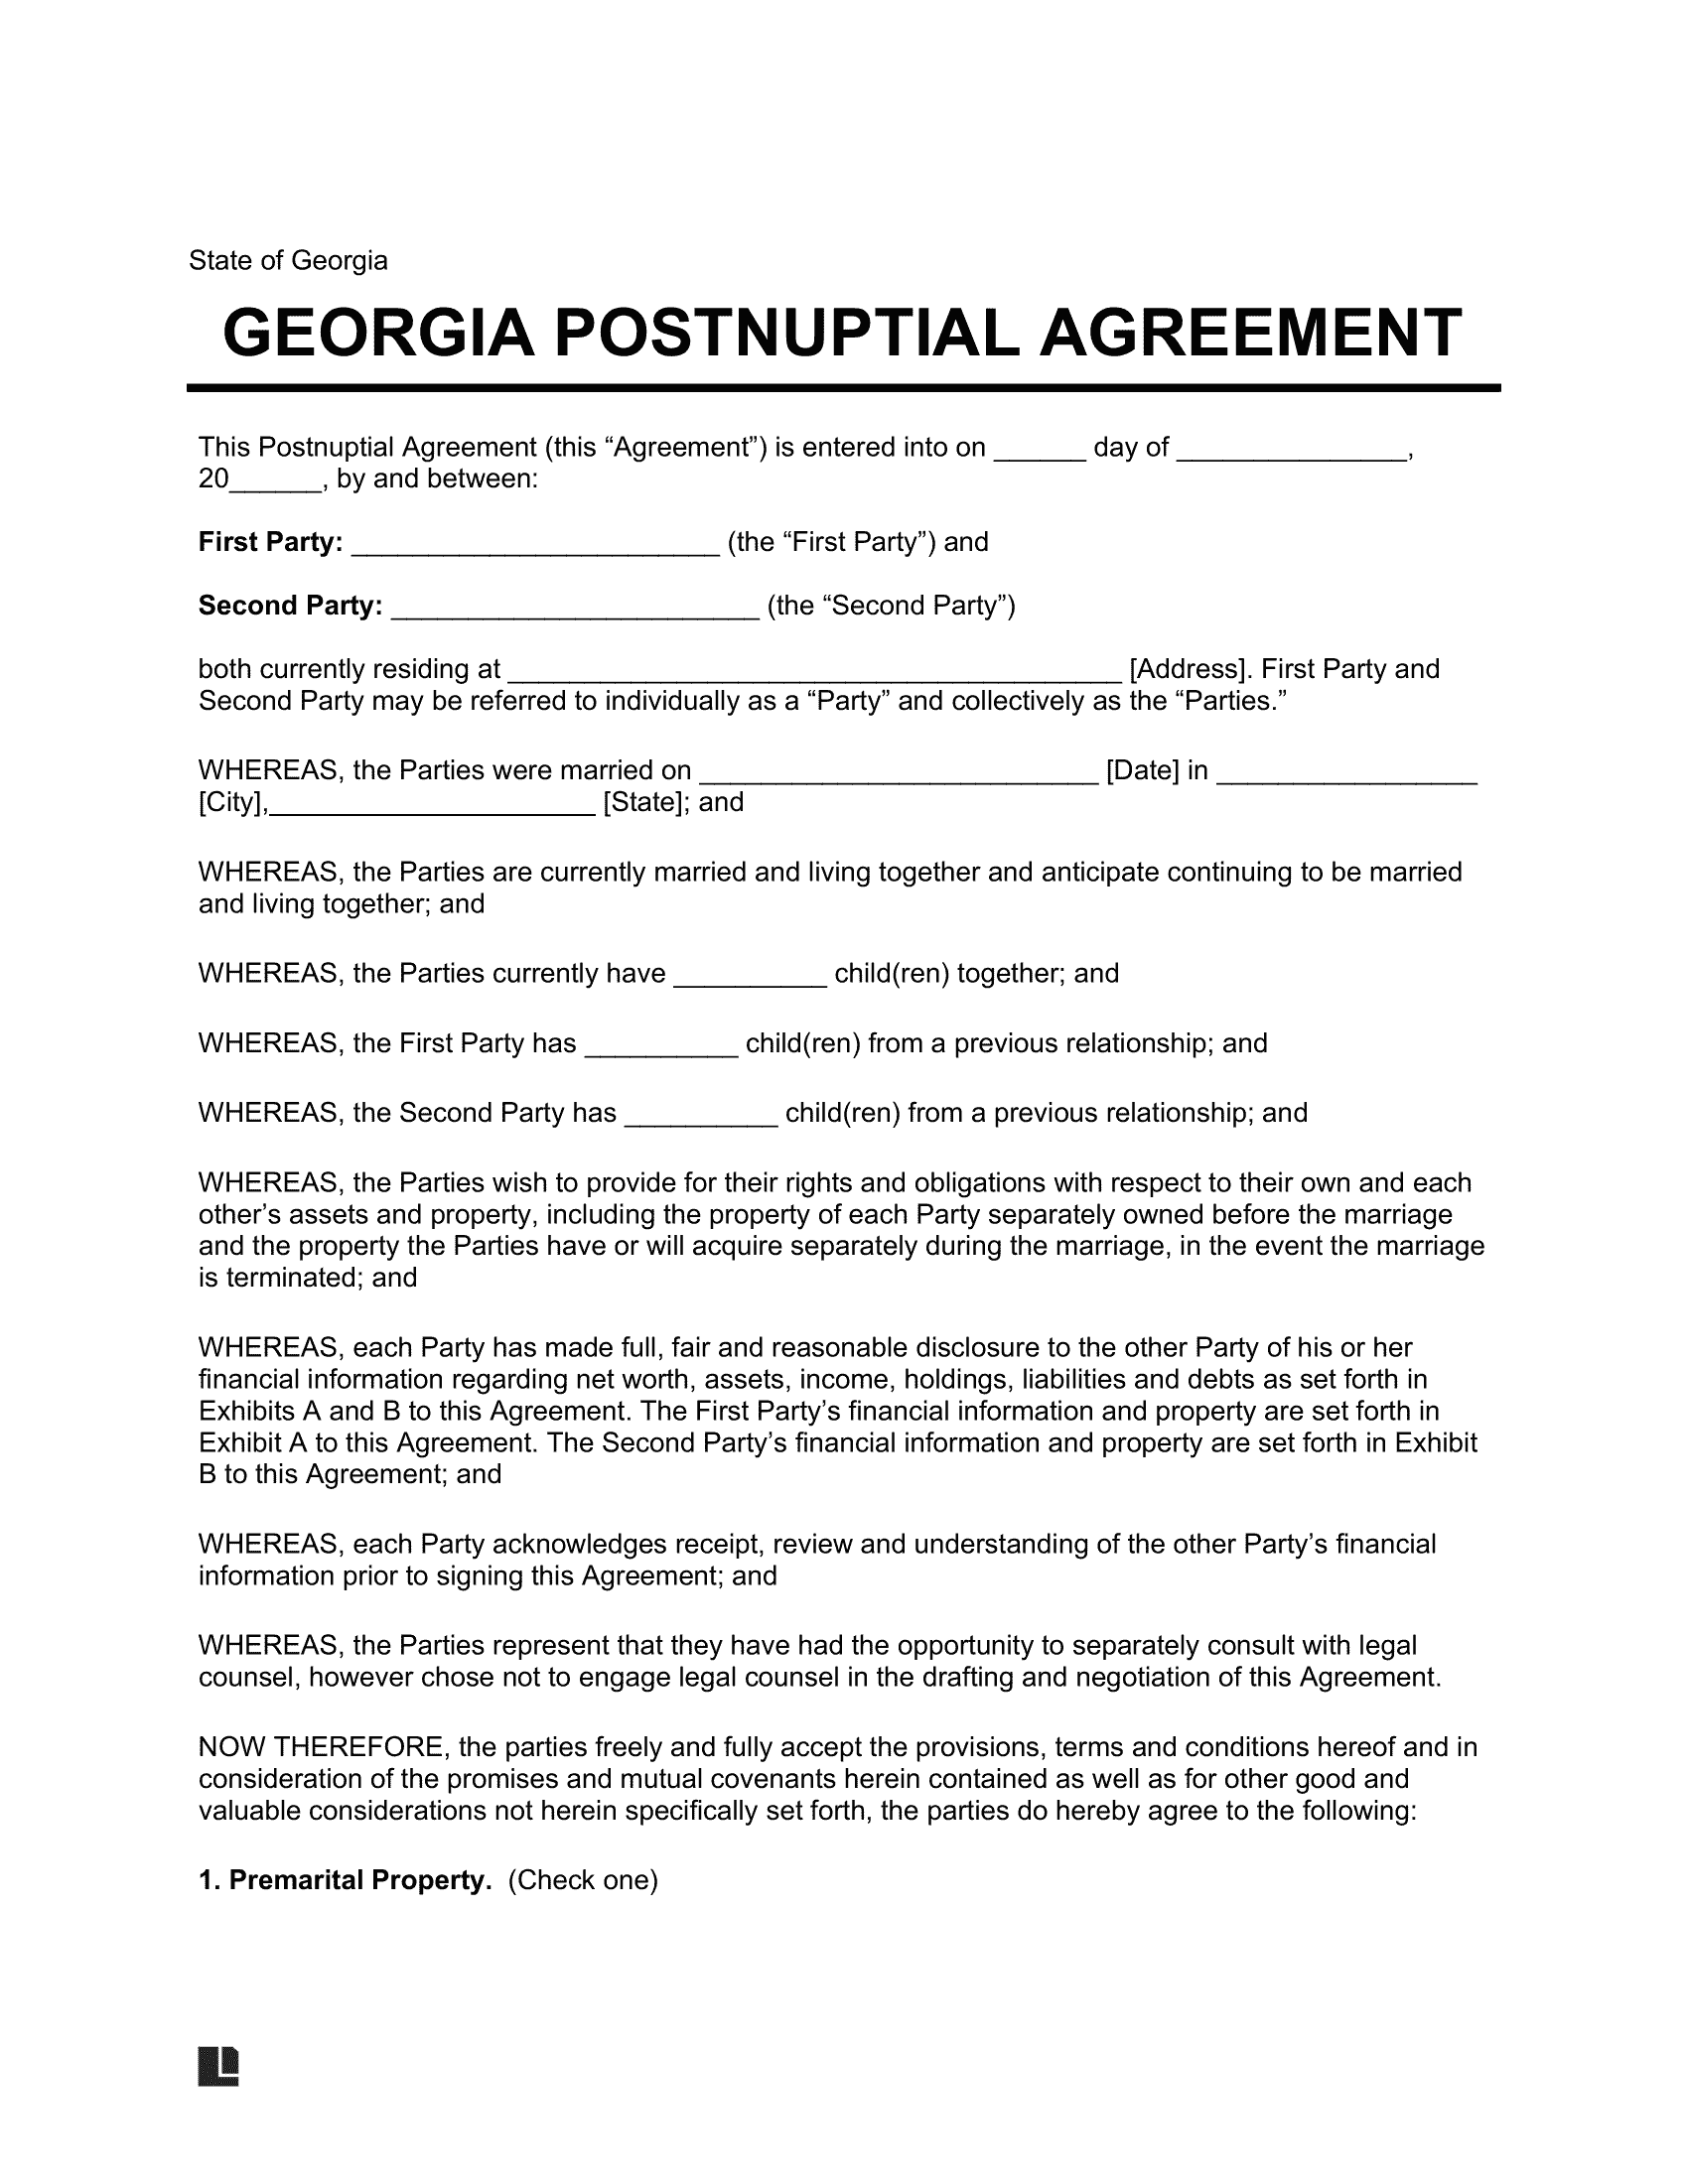 Georgia Postnuptial Agreement Template